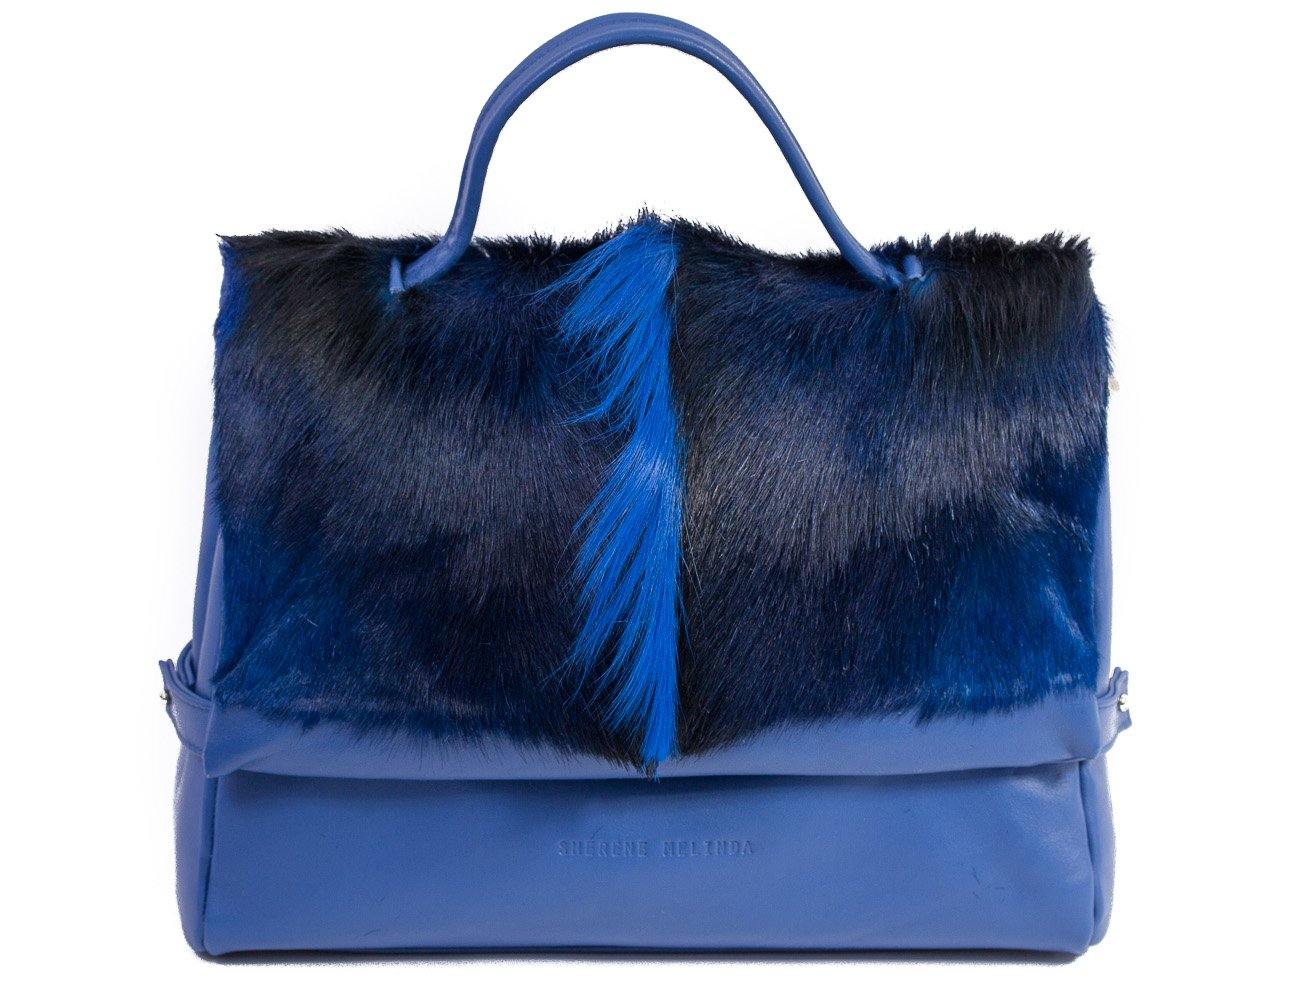 sherene melinda springbok hair-on-hide royal blue leather smith tote bag Fan front